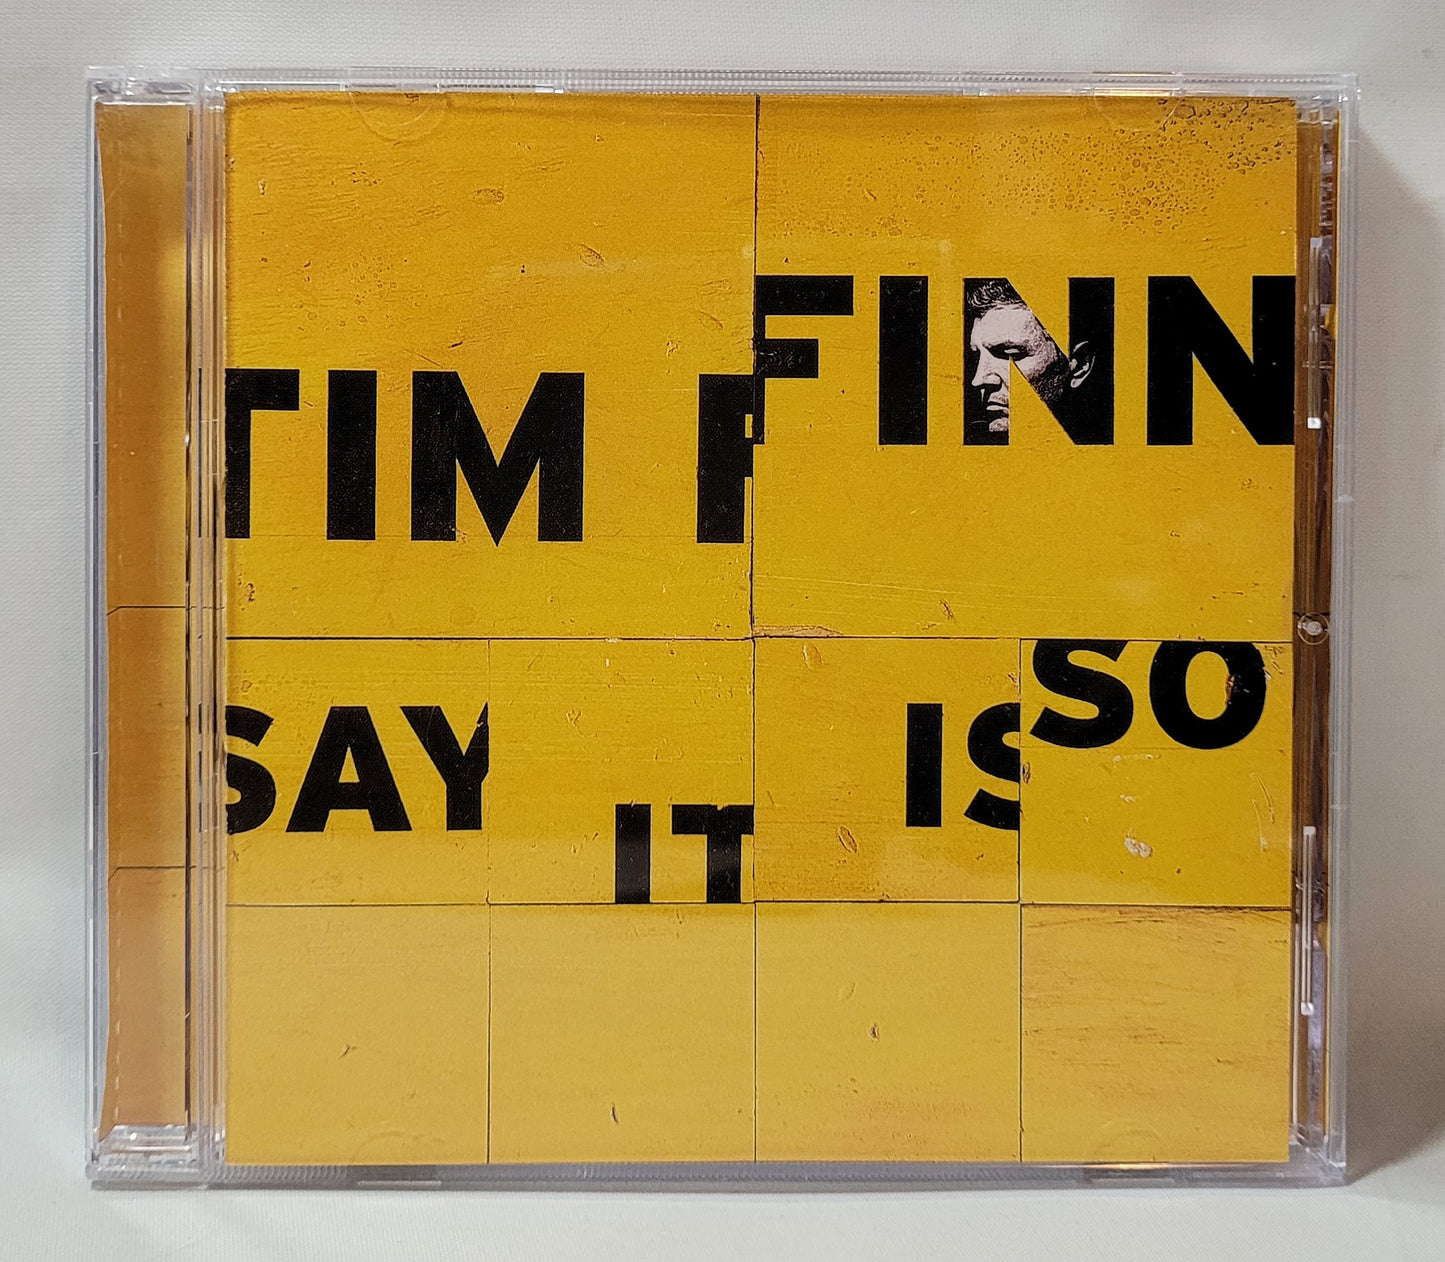 Tim Finn - Say It Is So [CD]